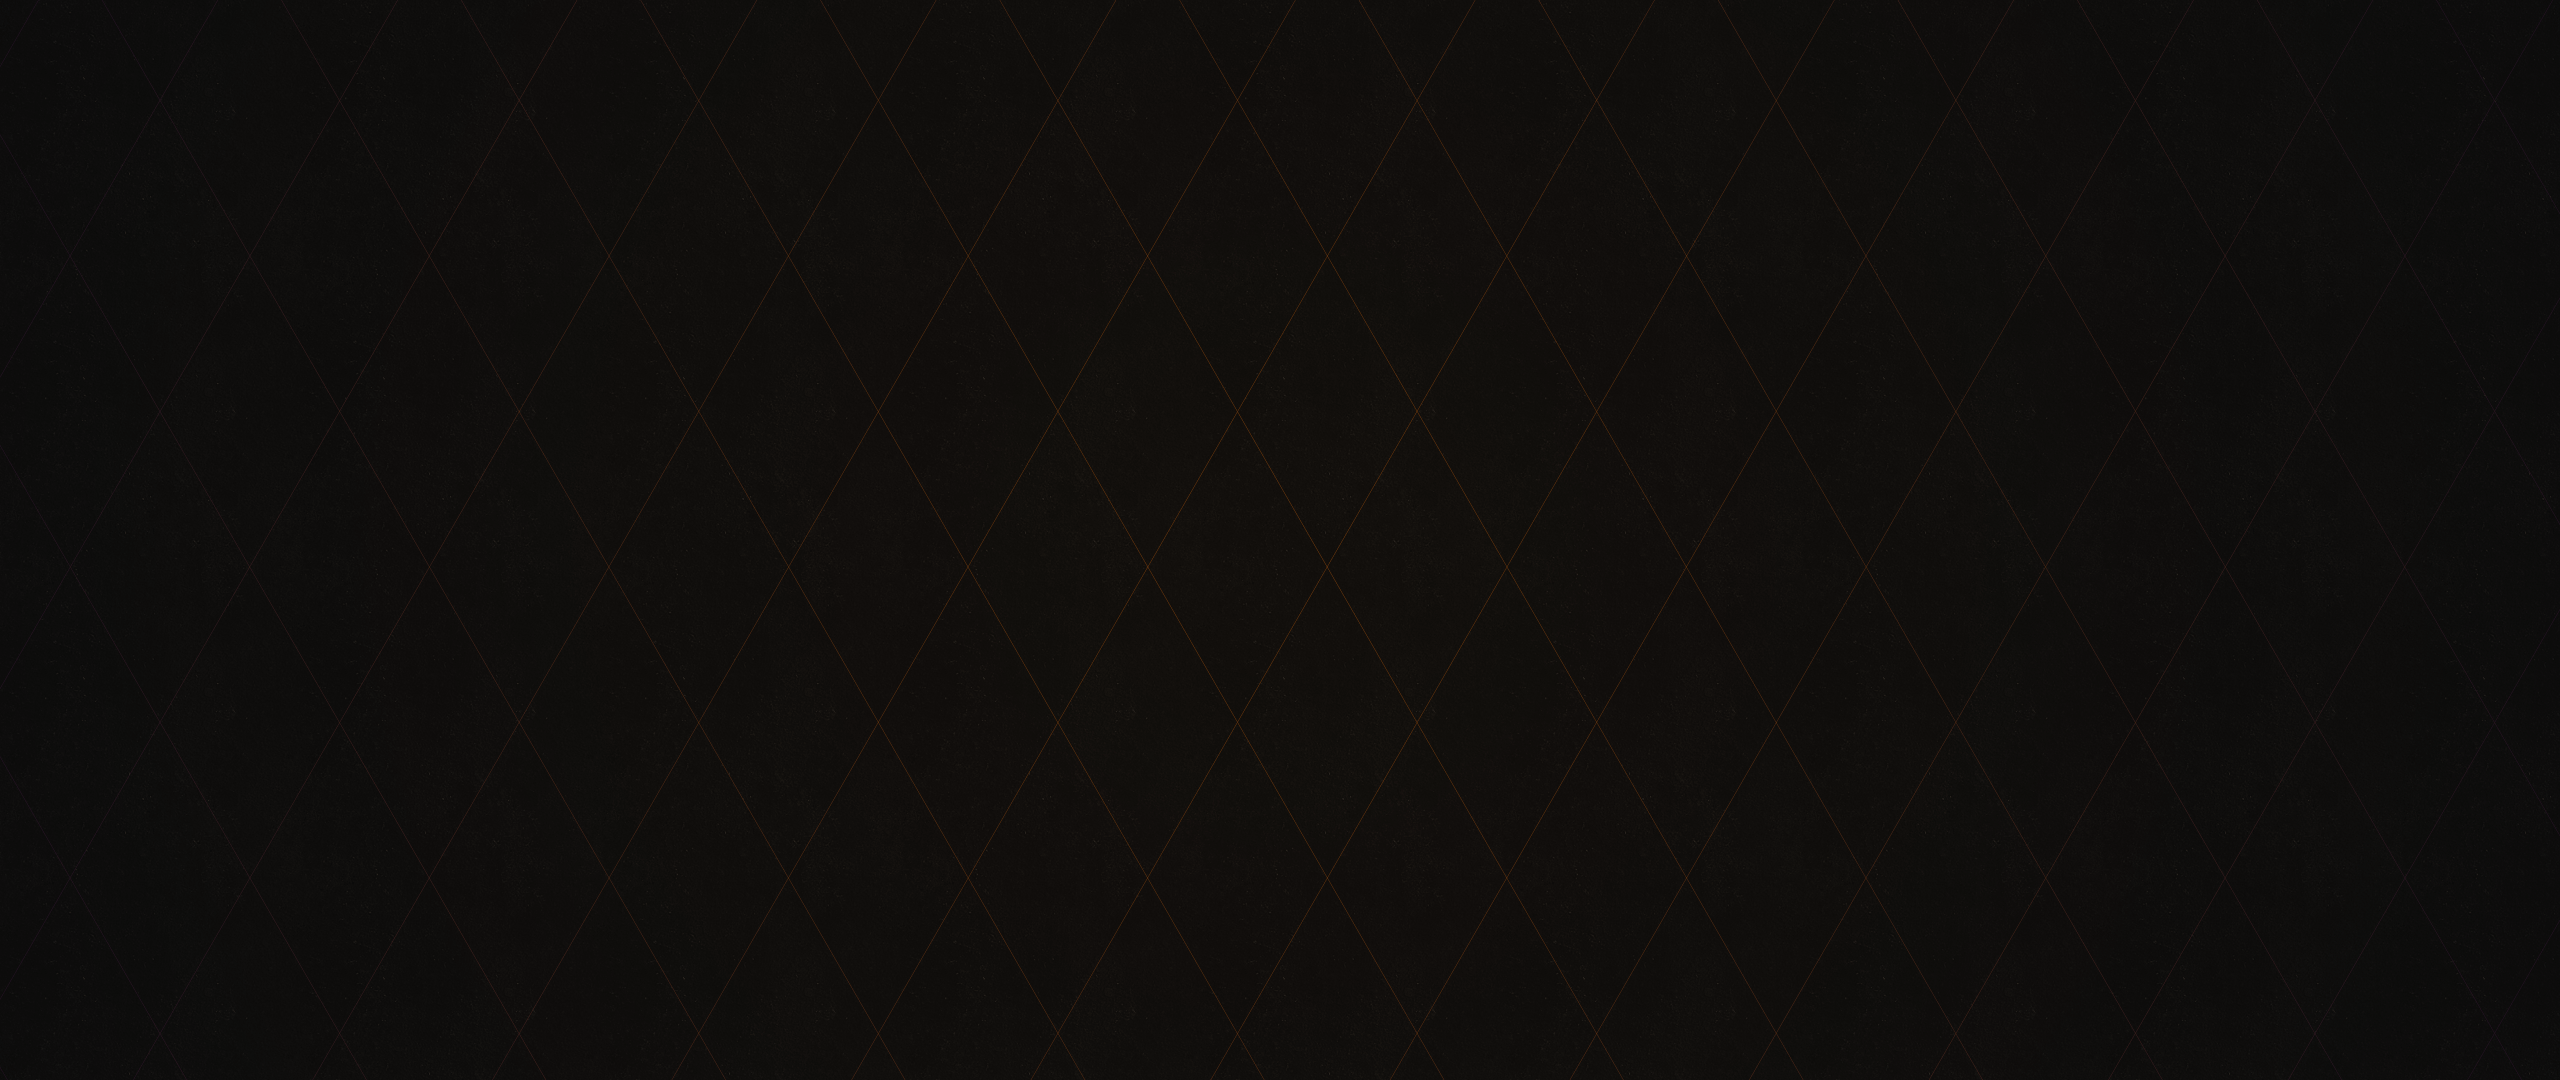 64K Ultra Hd Black Wallpapers - Top Free 64K Ultra Hd Black Backgrounds